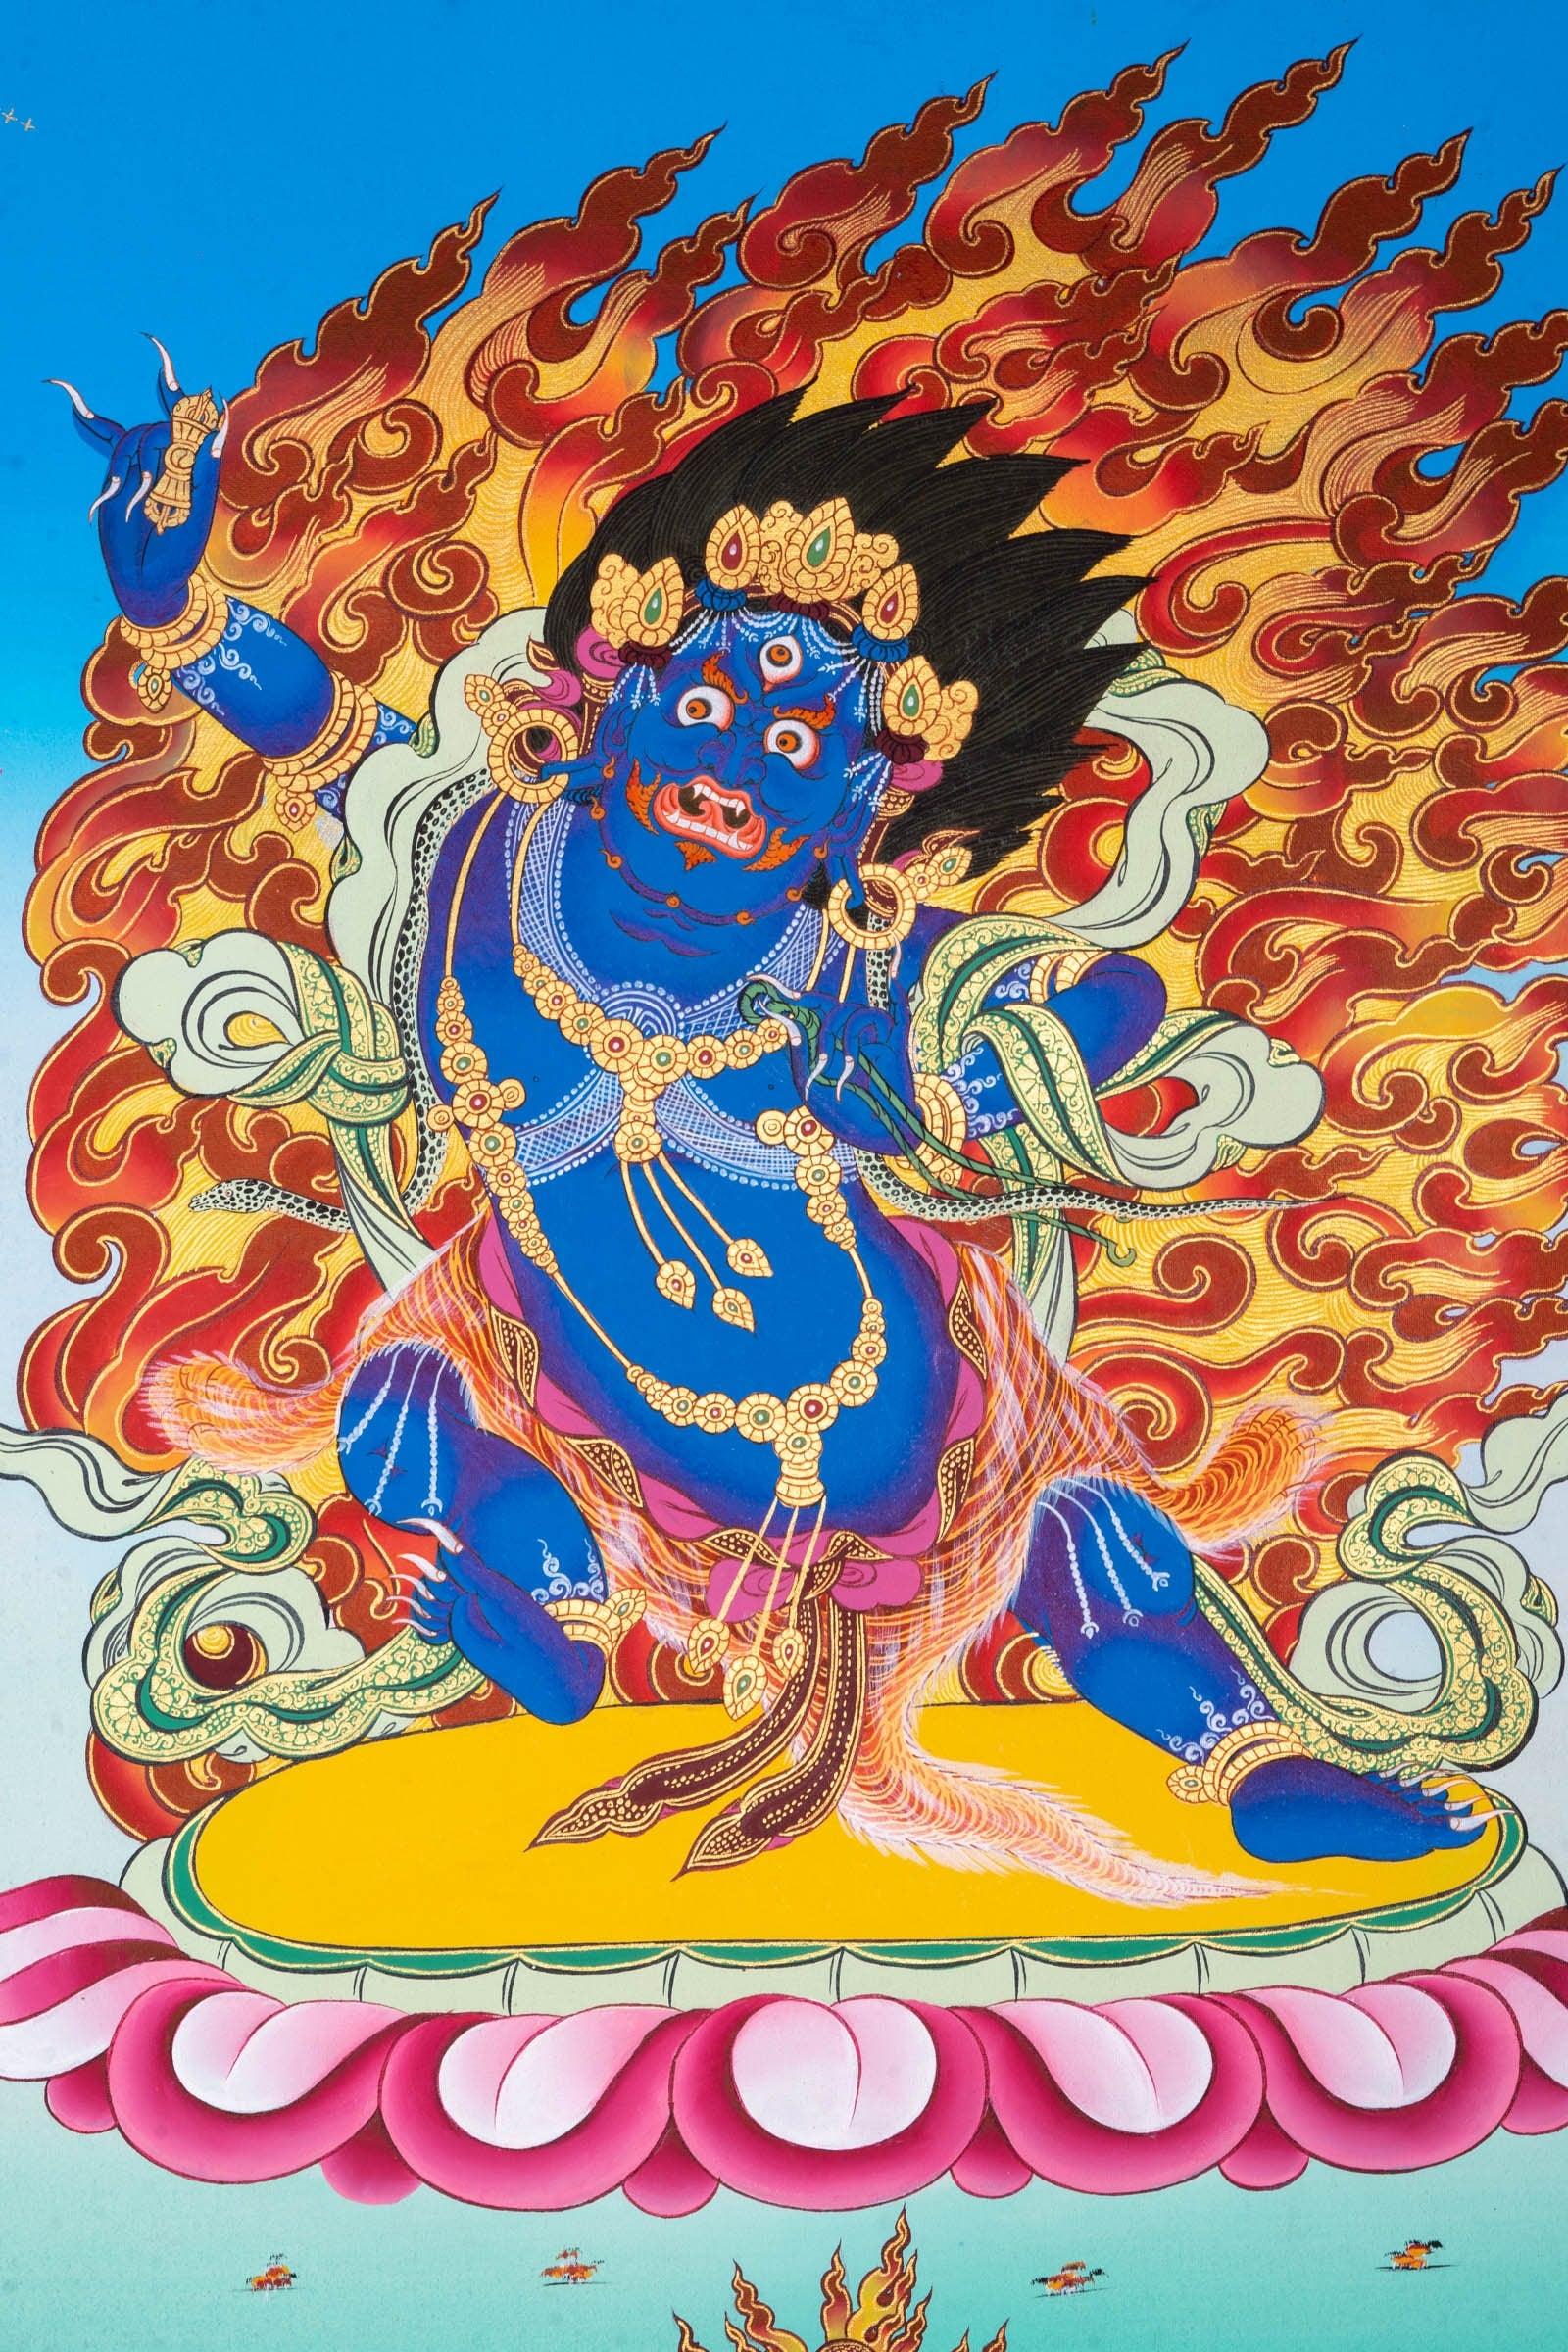 Vajrapani Buddhist Thangka Painting - Himalayas Shop